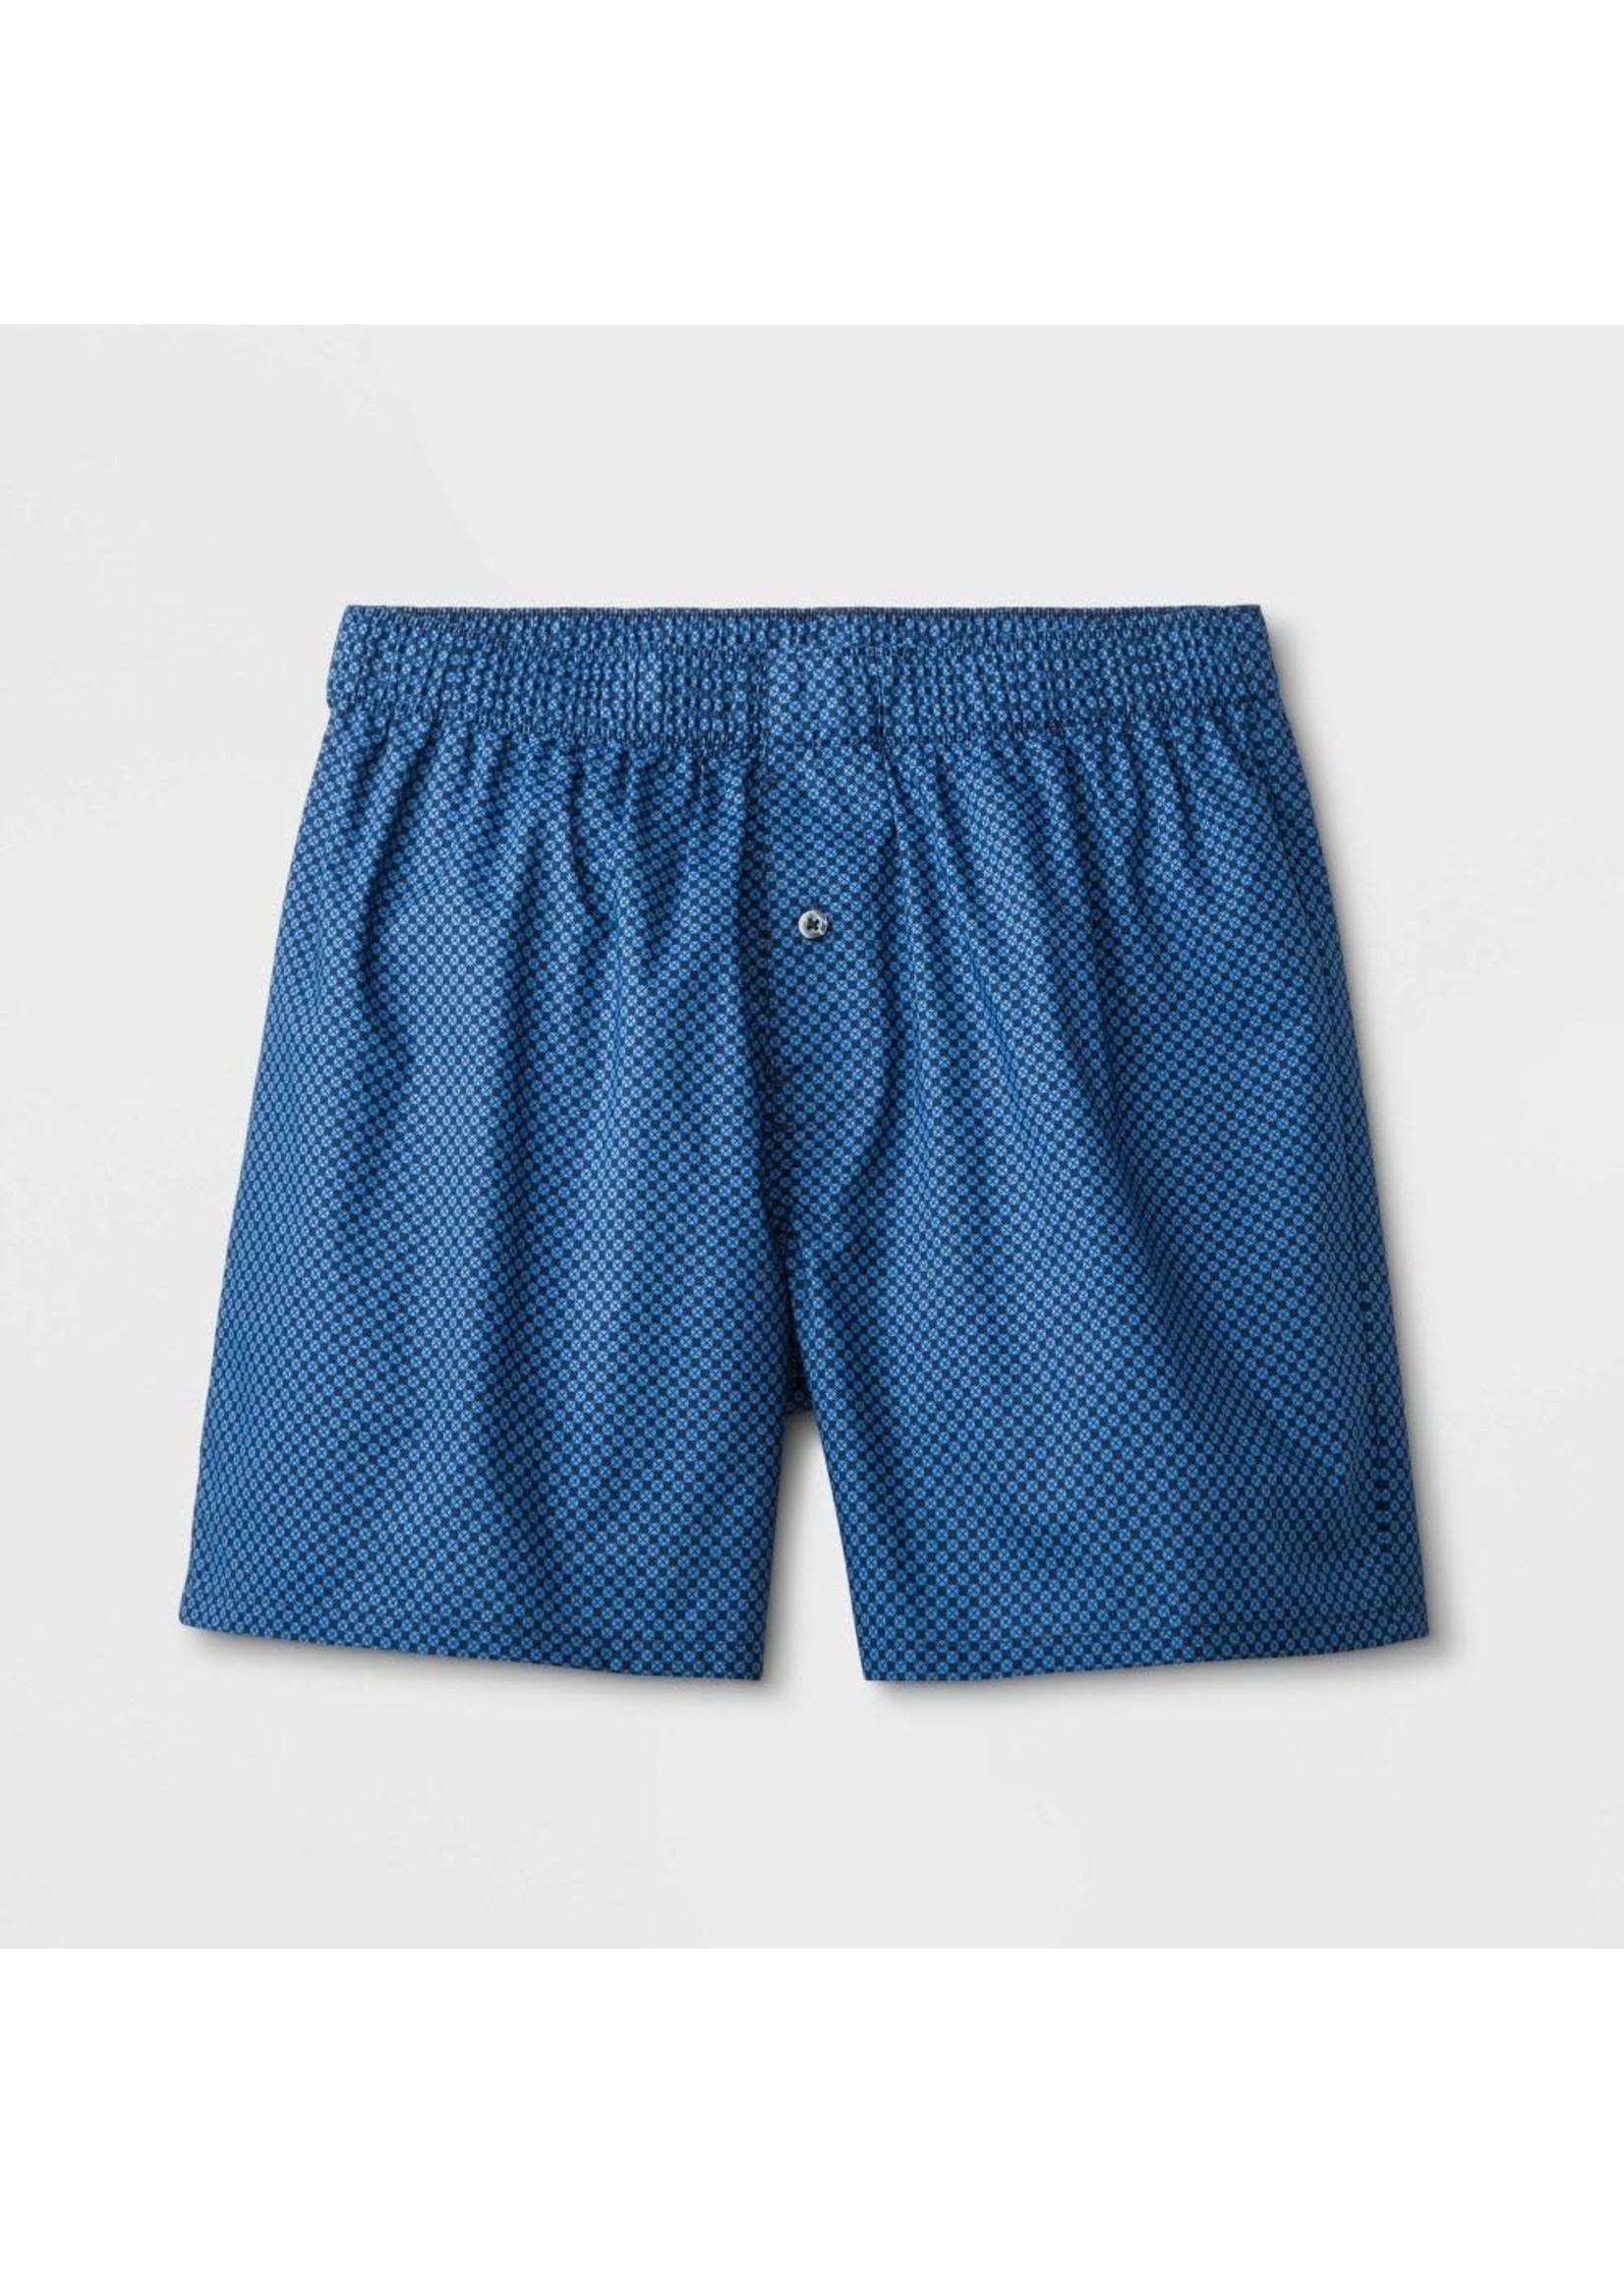 Men's Boxer Shorts - Goodfellow & Co. Blue S